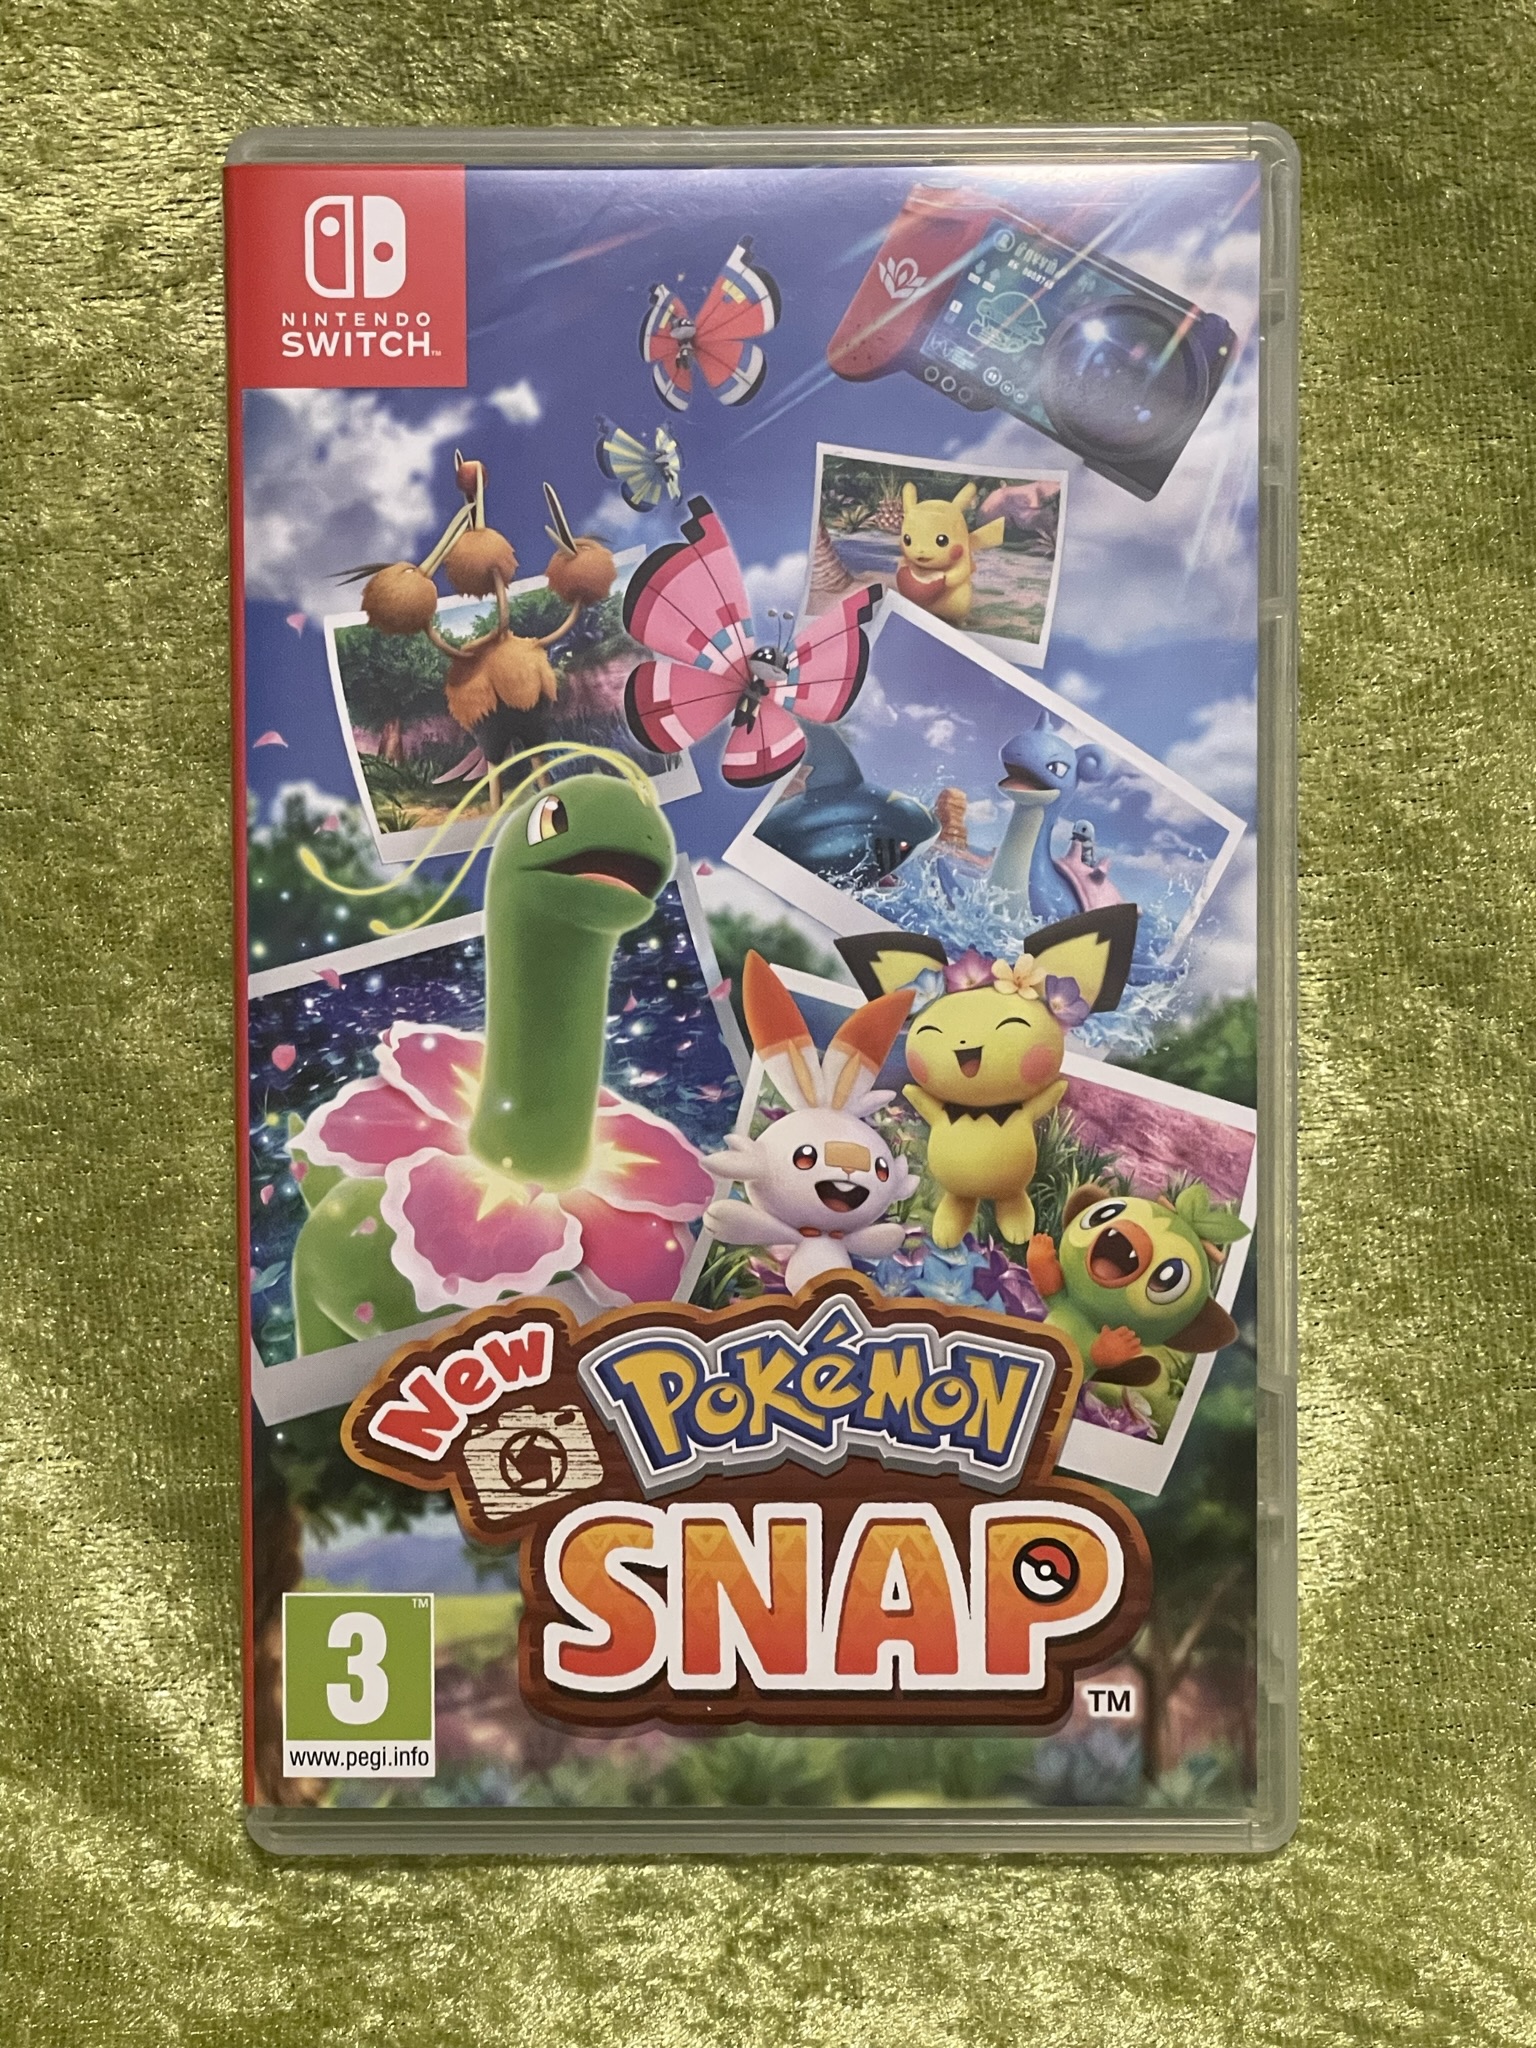 New Pokemon Snap